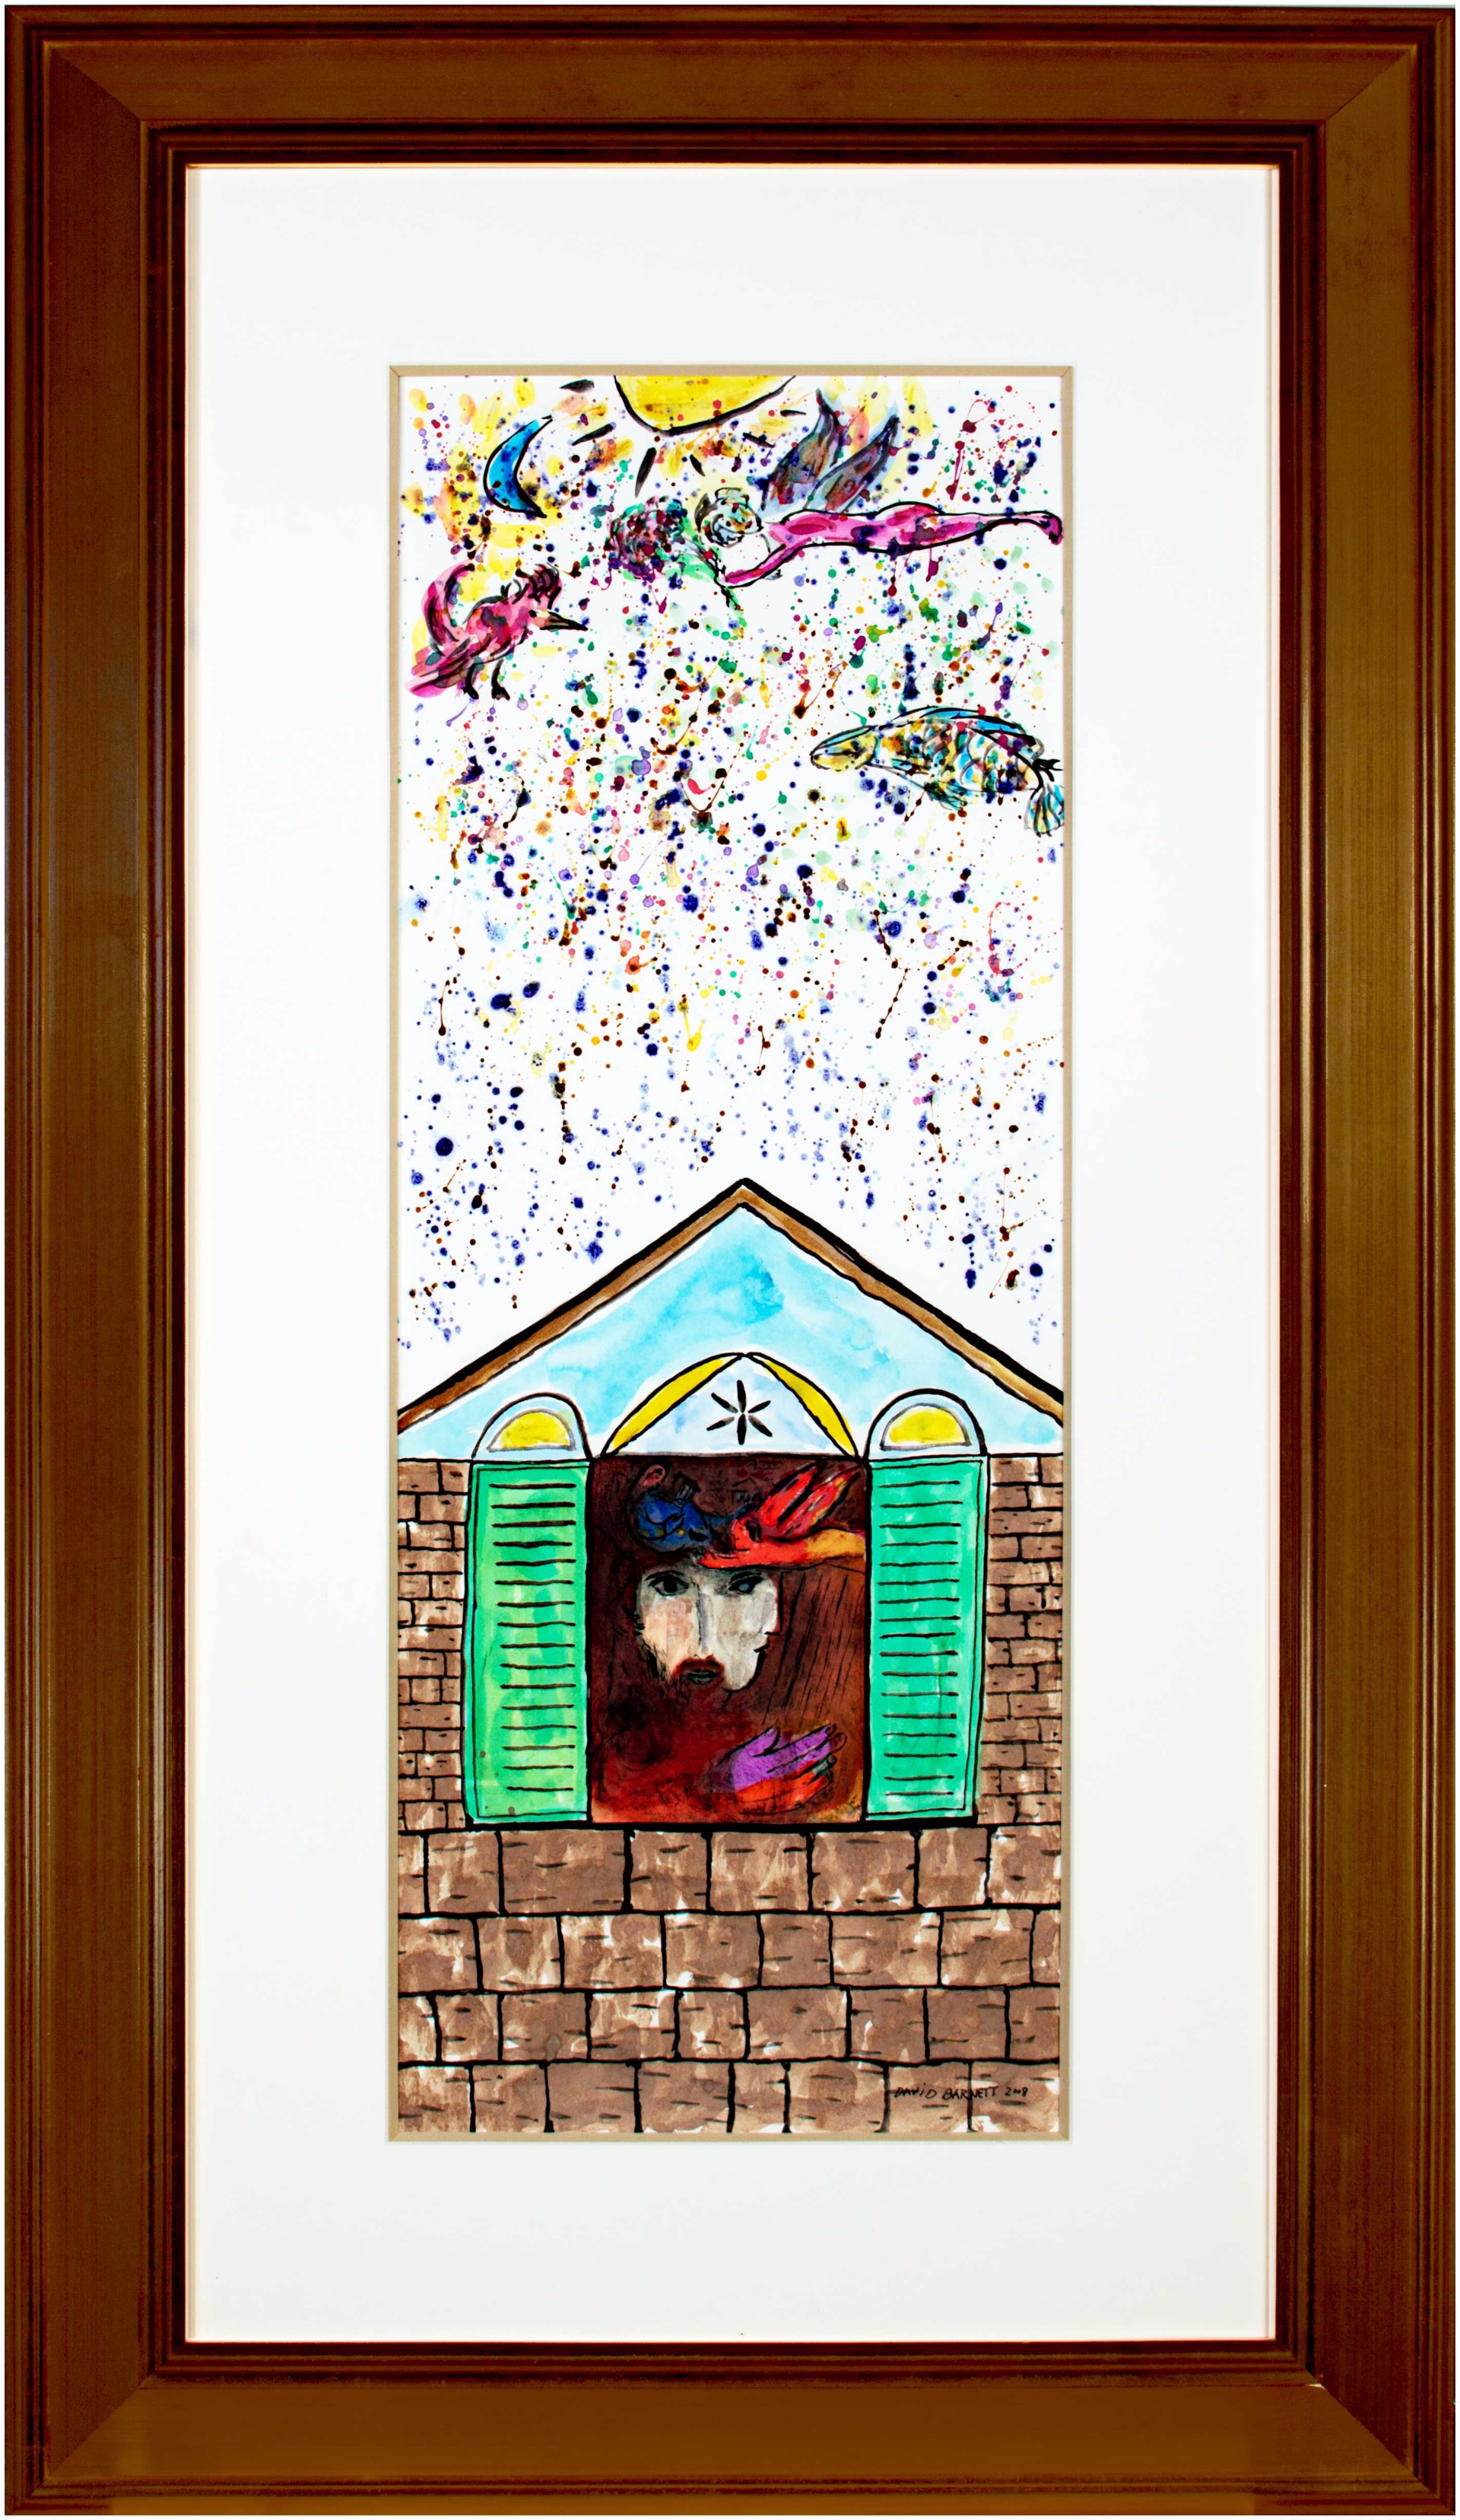 Homage to Chagall:  David & Bathsheba Sunrise Celebration by David Barnett